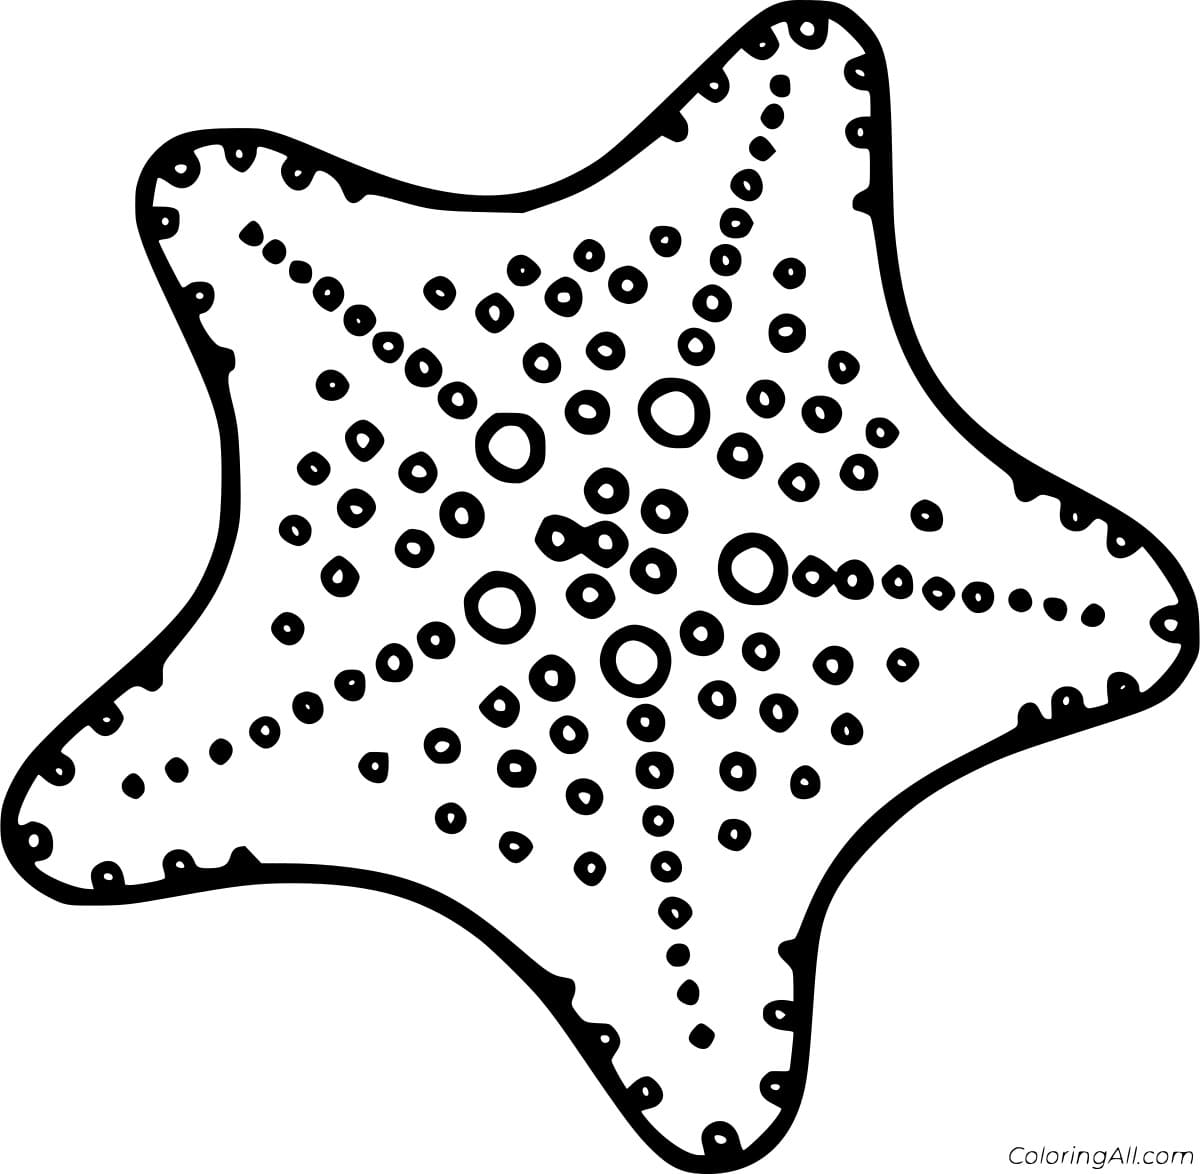 Starfish With Circle Patterns Image